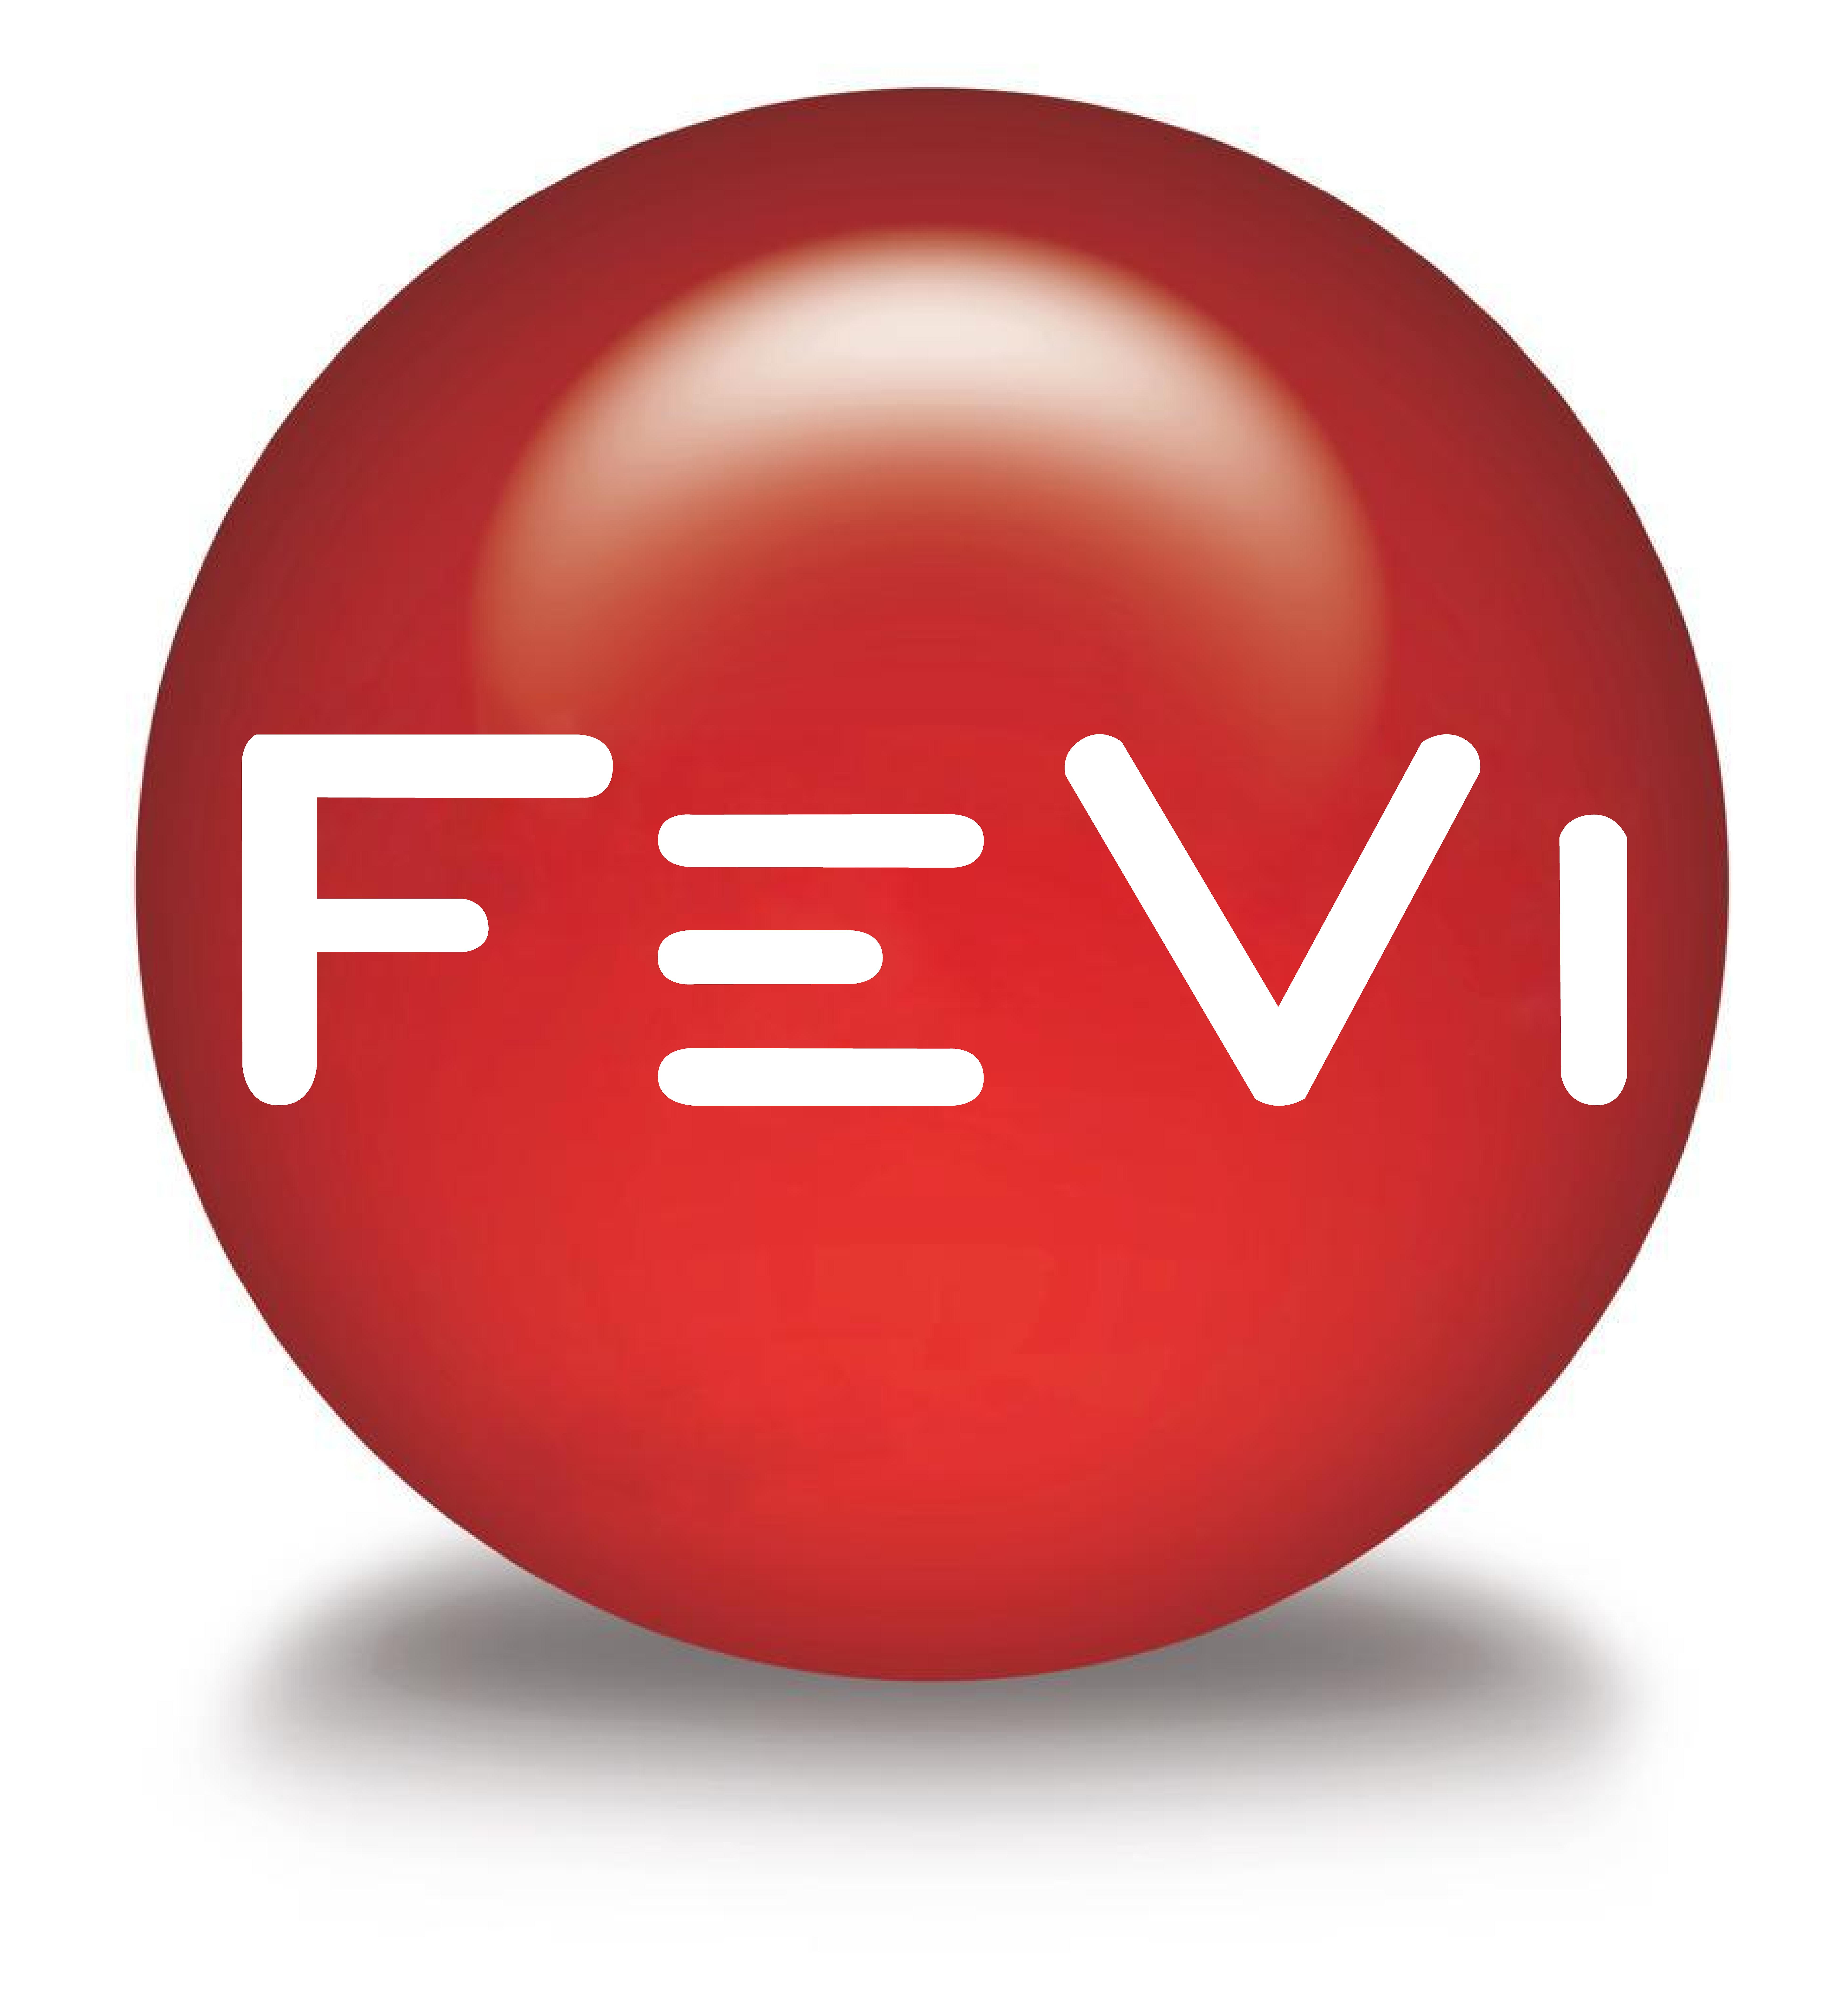 NEWS: Restyling logo Fevi